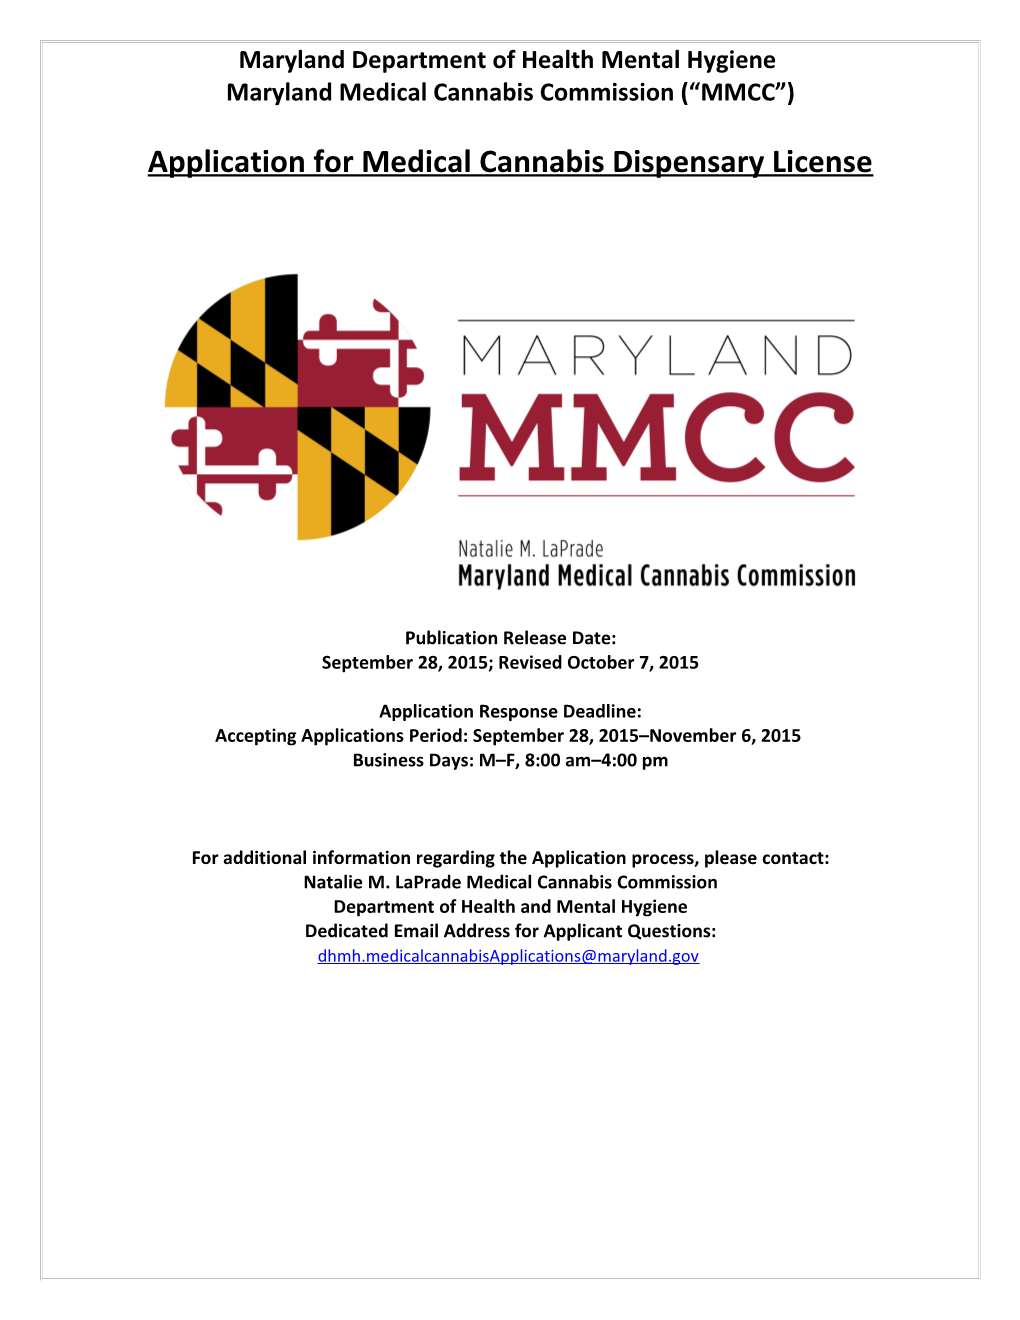 MMCC Dispensary Application